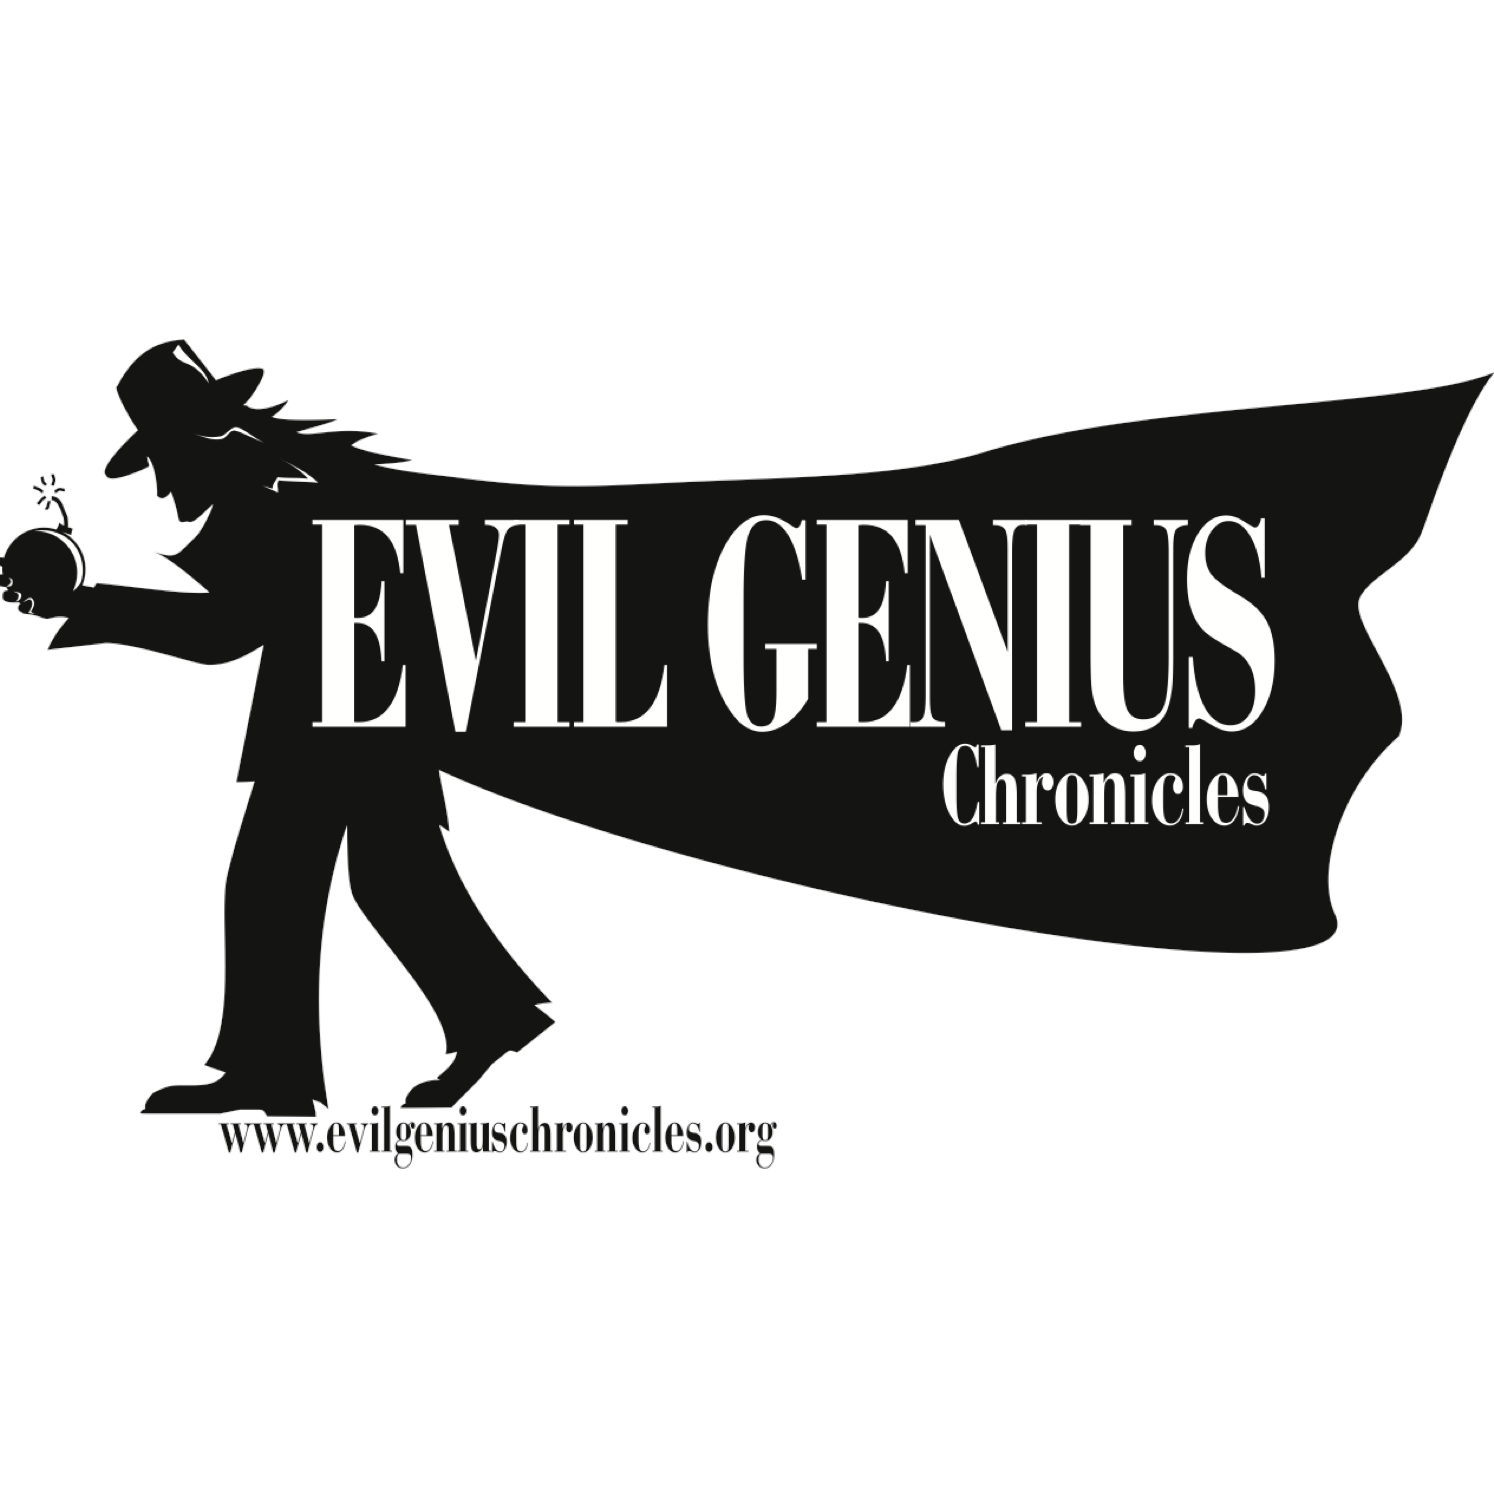 The Evil Genius Chronicles logo